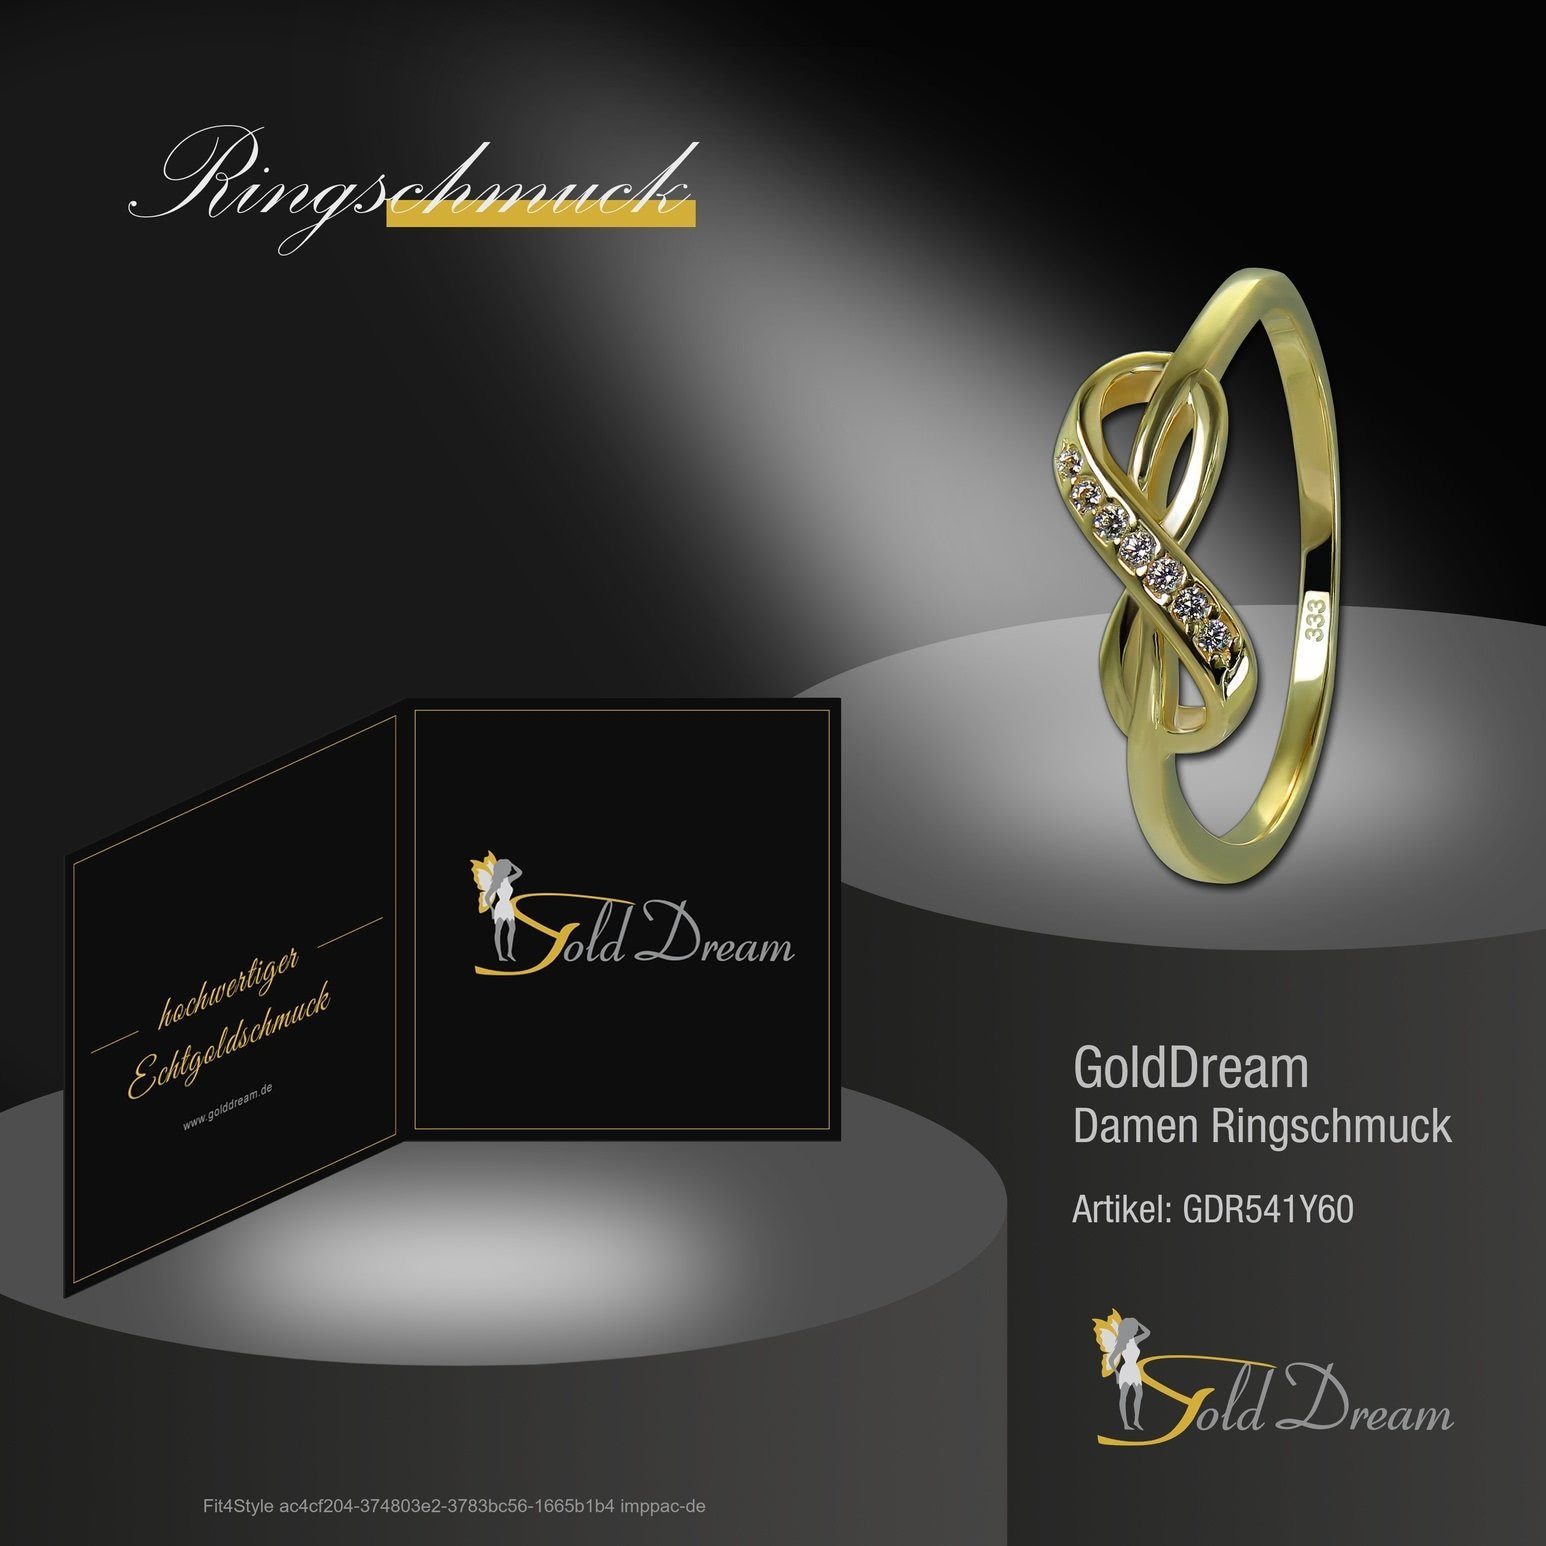 GoldDream GoldDream 8 Gr.60 Farbe: Ring Gold (Fingerring), weiß gold, Infinity Gelbgold Damen - Karat, Ring Infinity Goldring 333